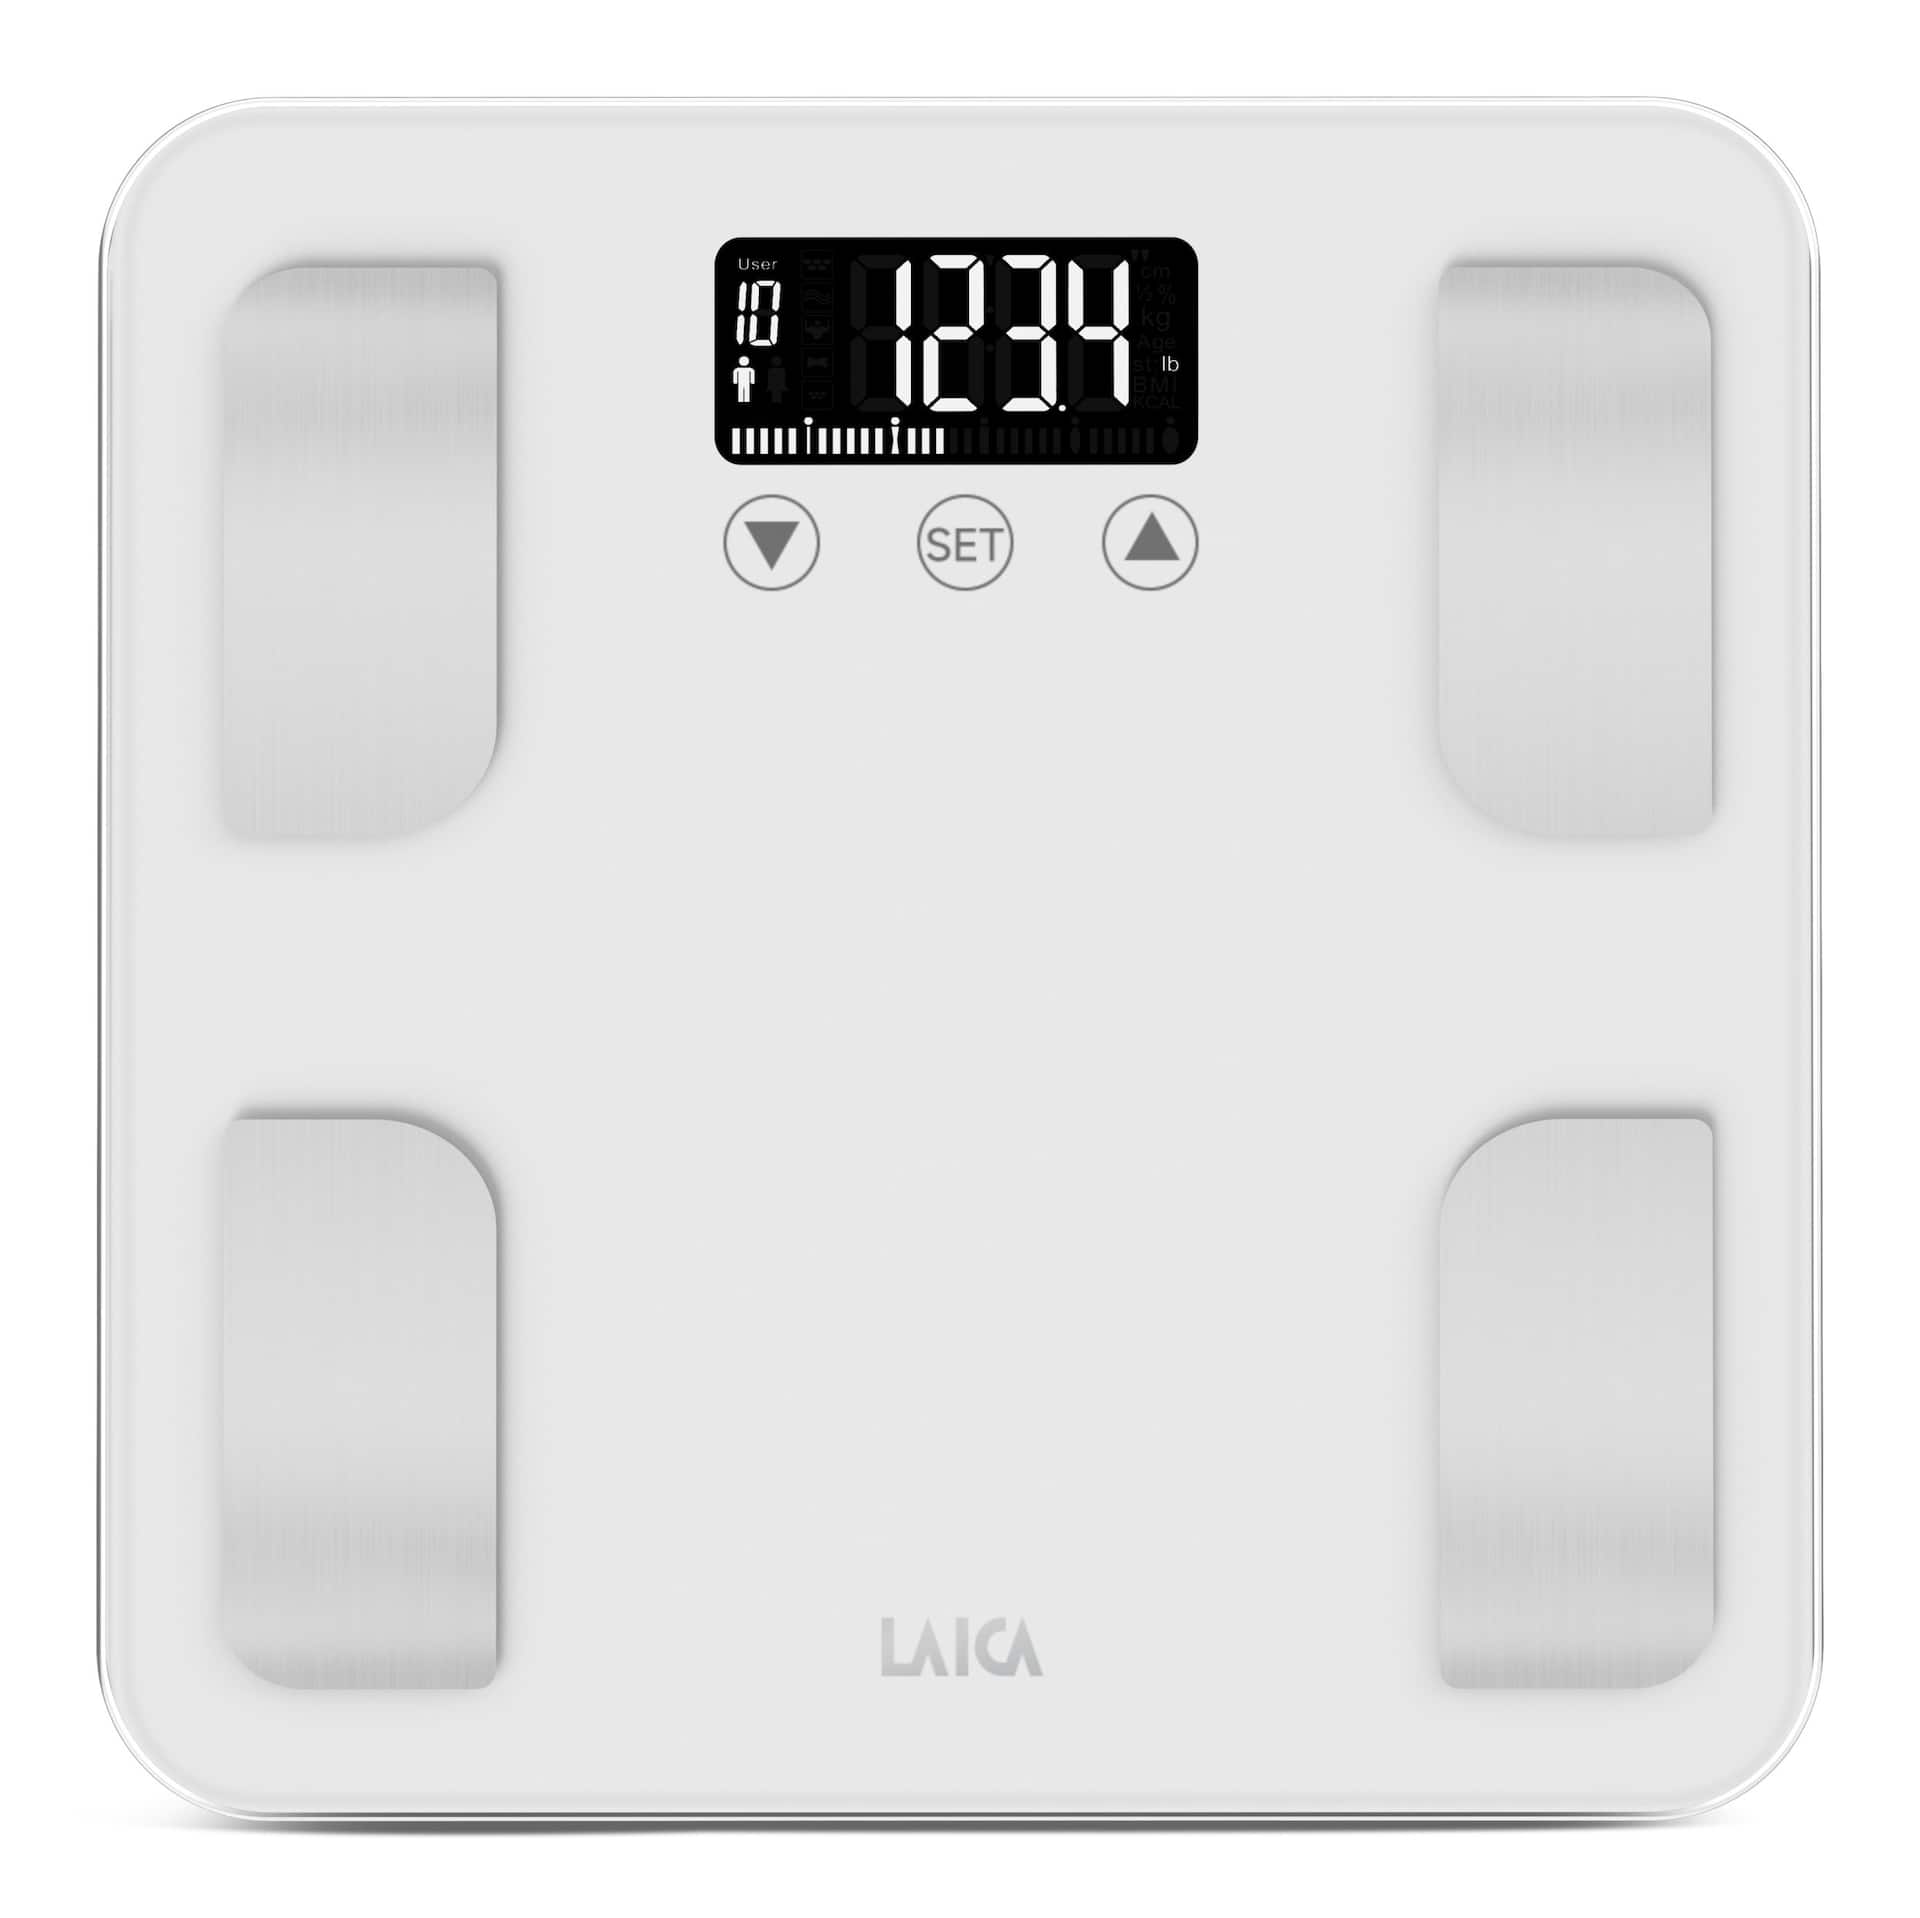 LAICA Digital Body Composition Bathroom Scale, White, 400-lb